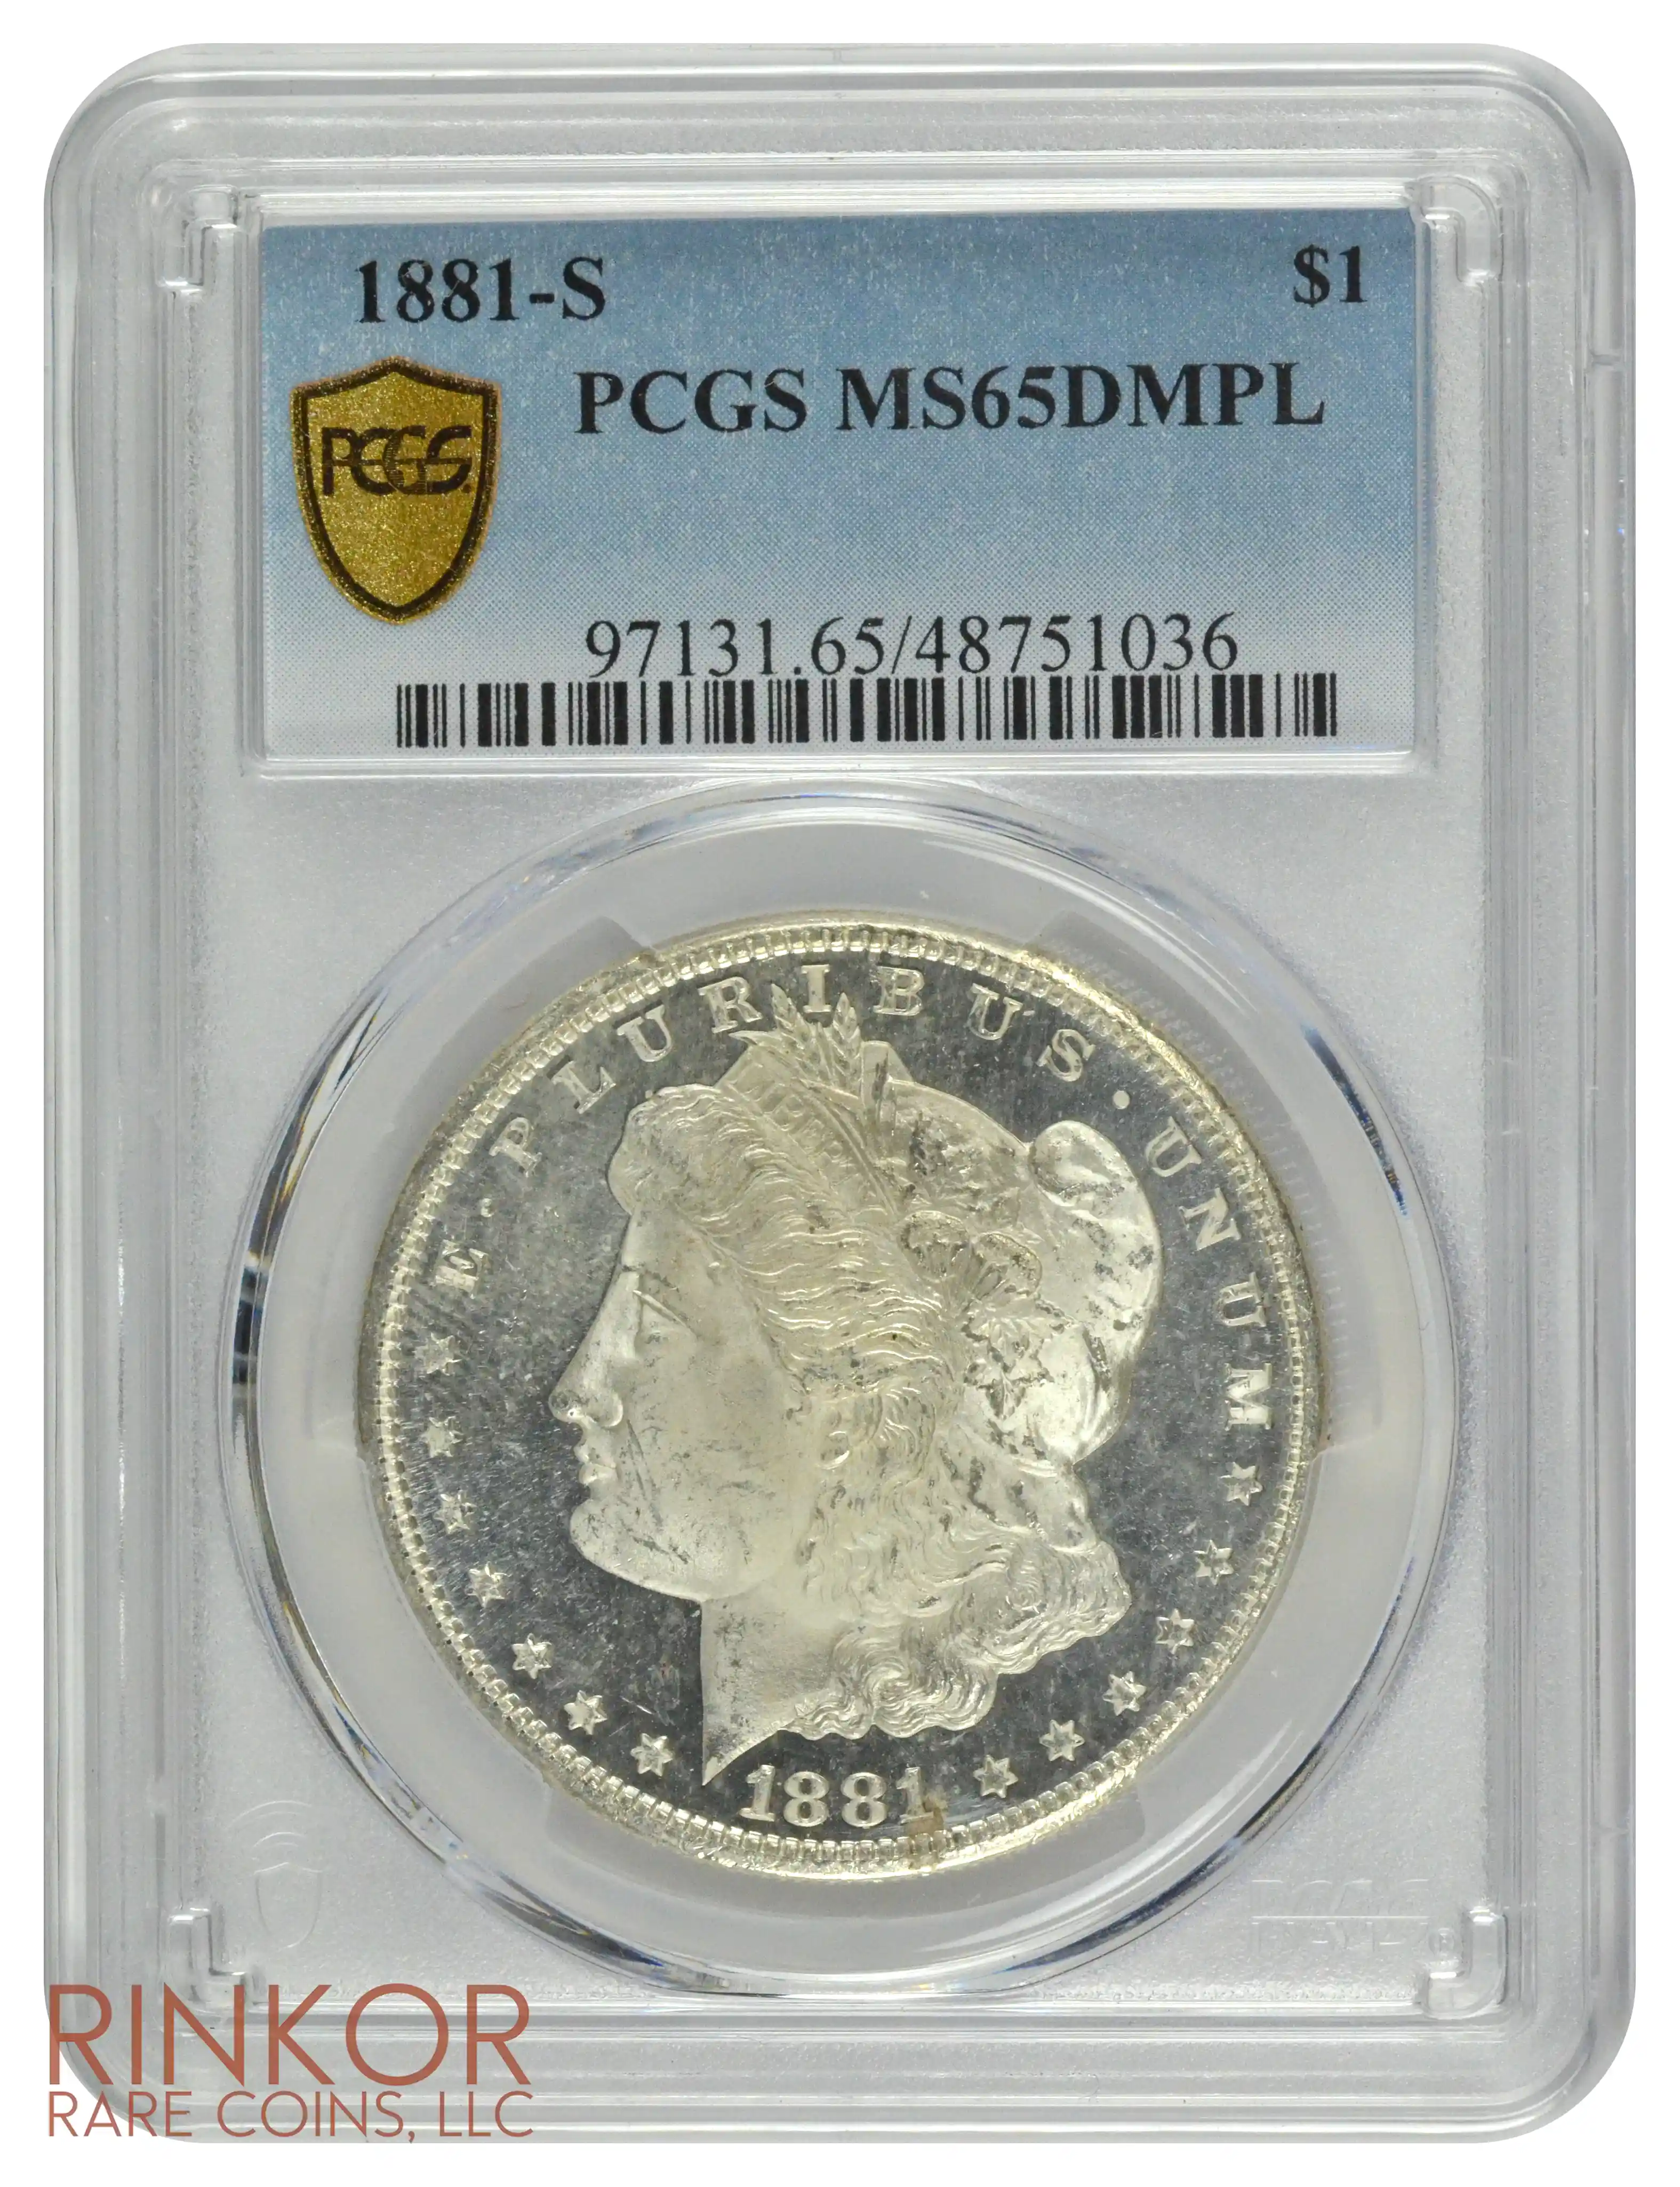 1881-S $1 PCGS MS 65 DMPL